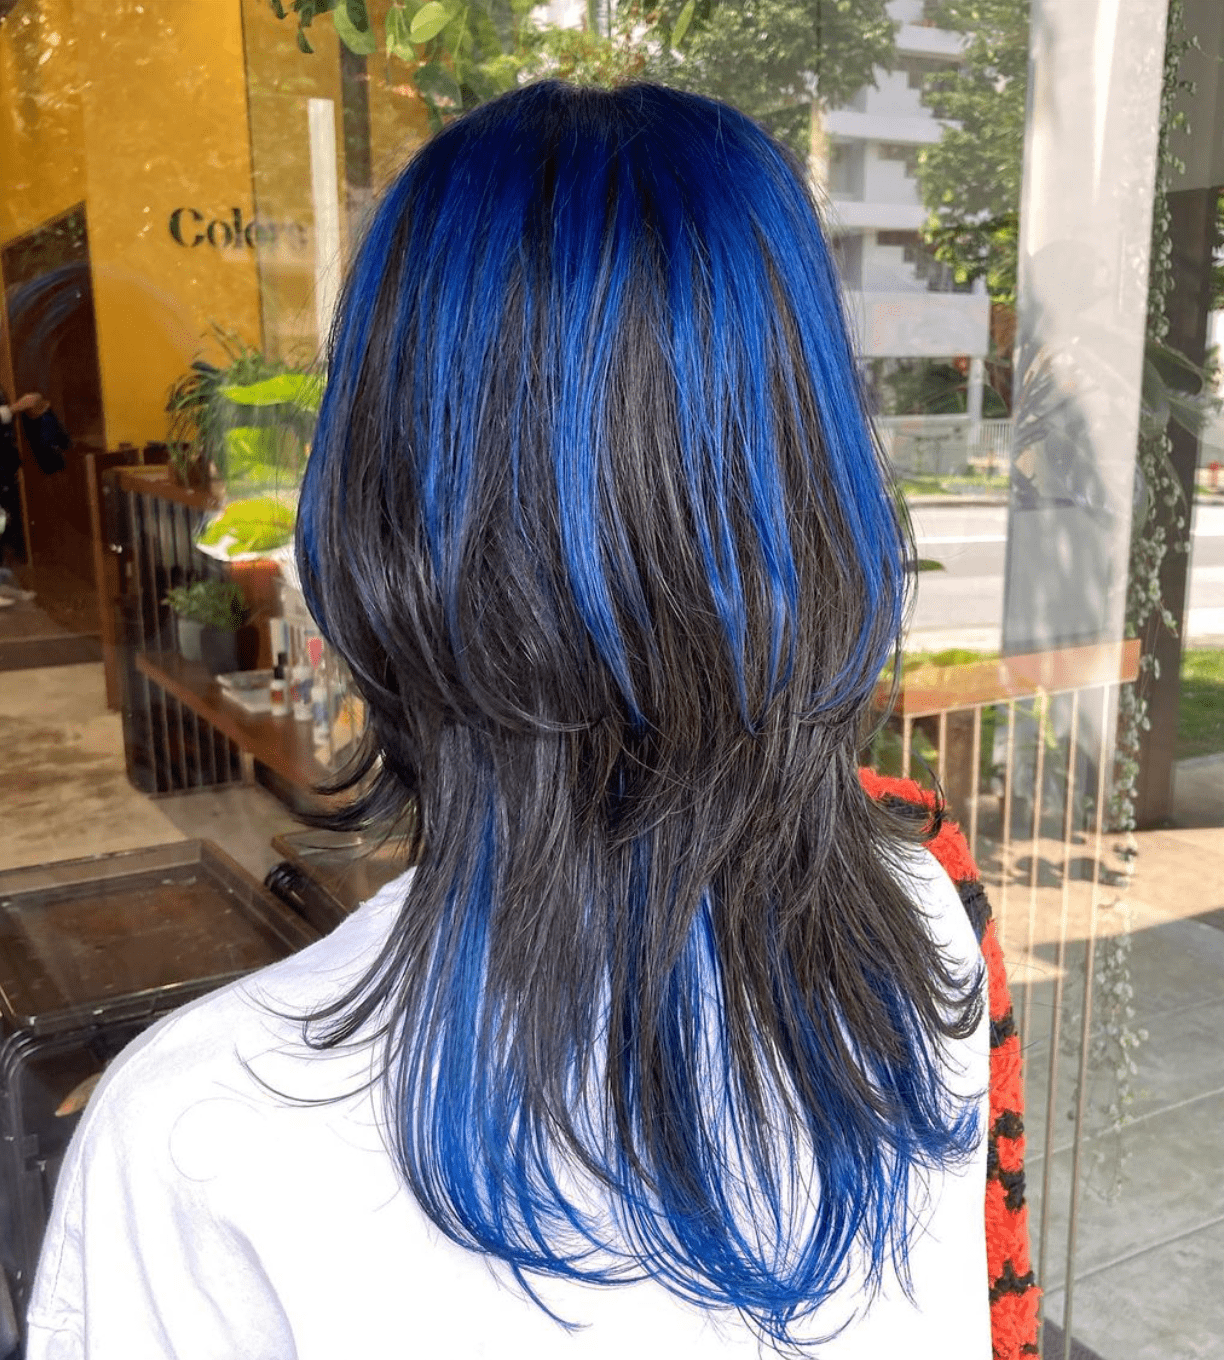 Colors Hair Salon